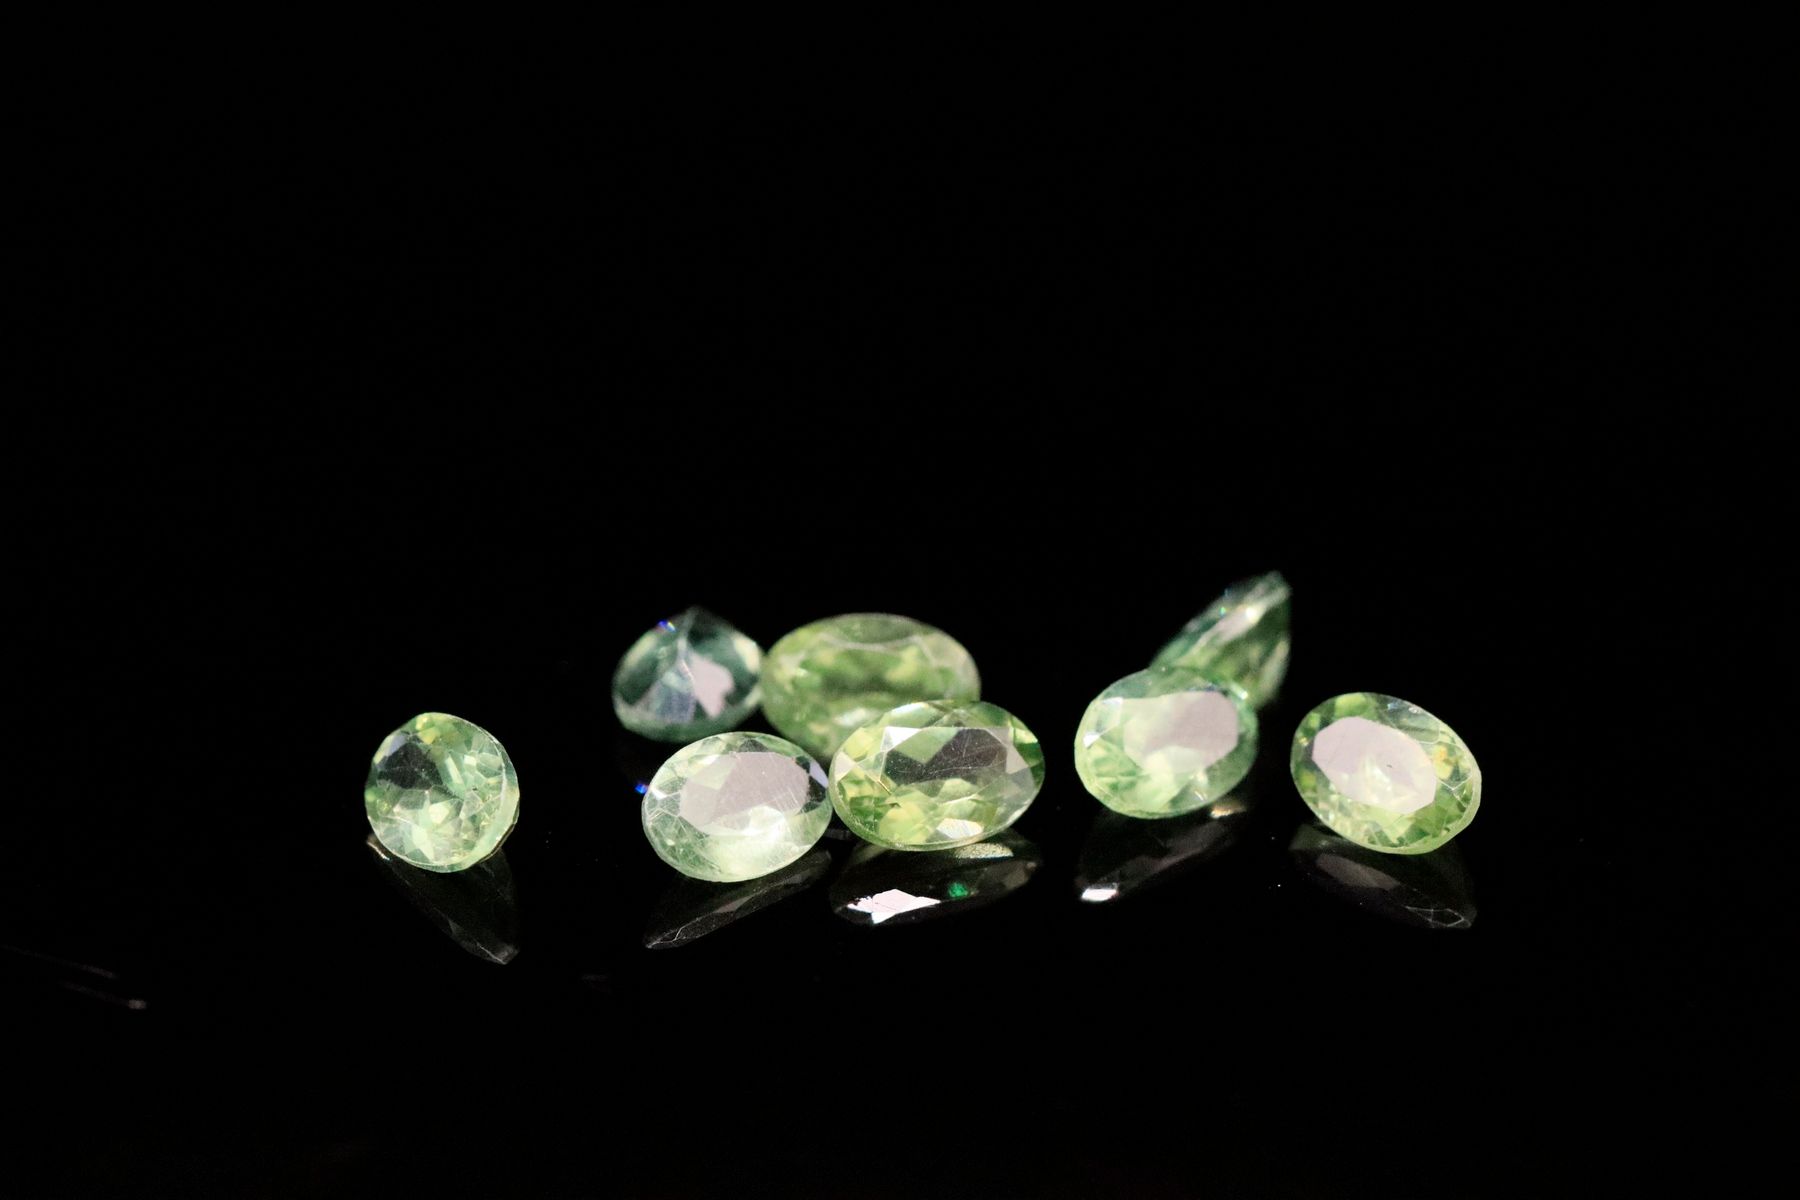 Null 纸质八颗椭圆形绿色磷灰石。
重量：3.96 克拉

平均尺寸：6 毫米 x 4.5 毫米